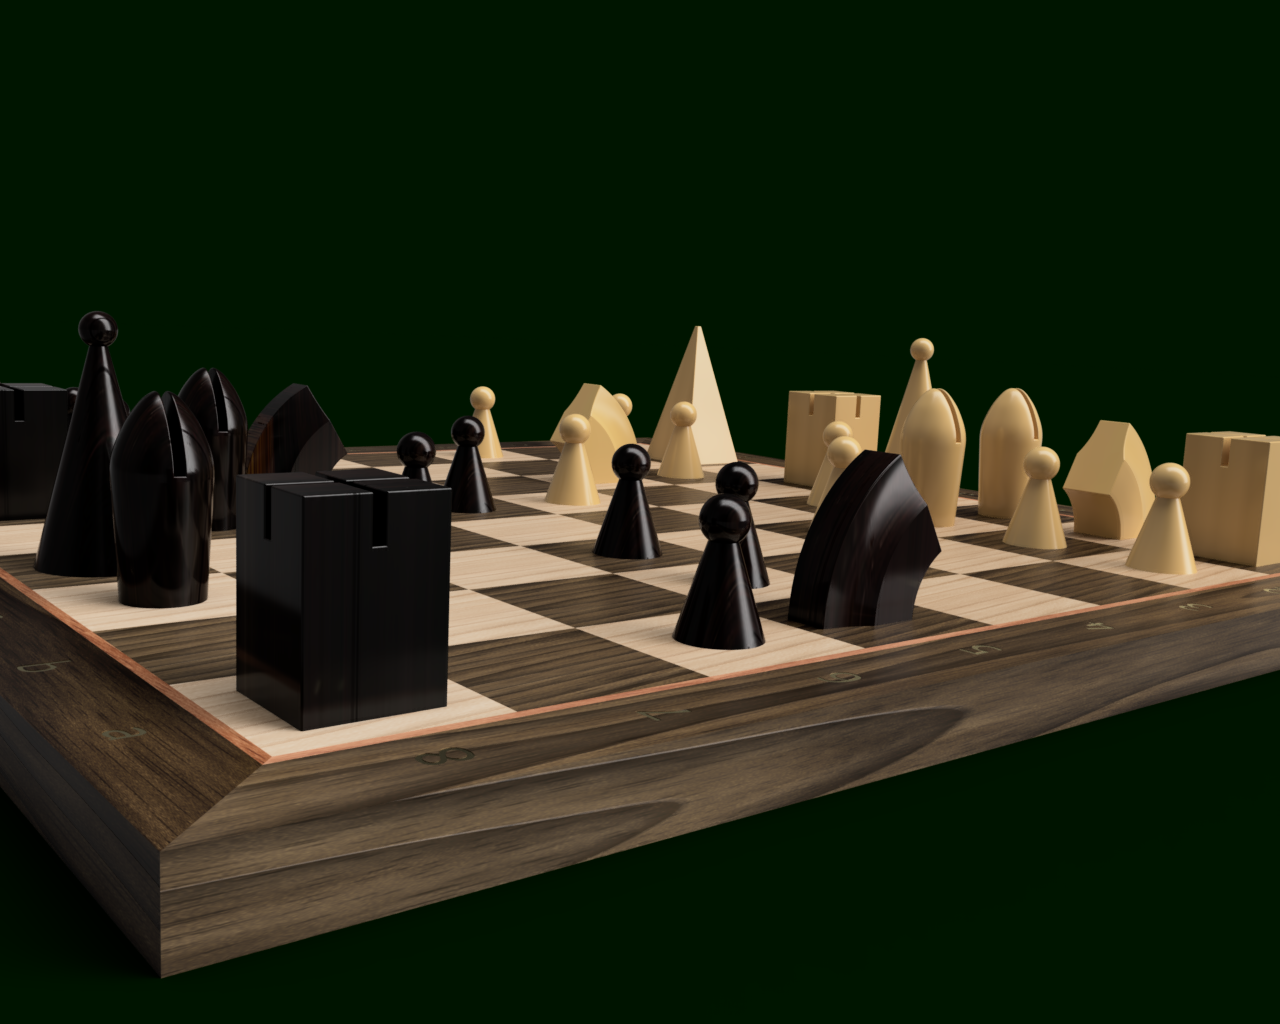 Eye On Design: Chess Set By Man Ray